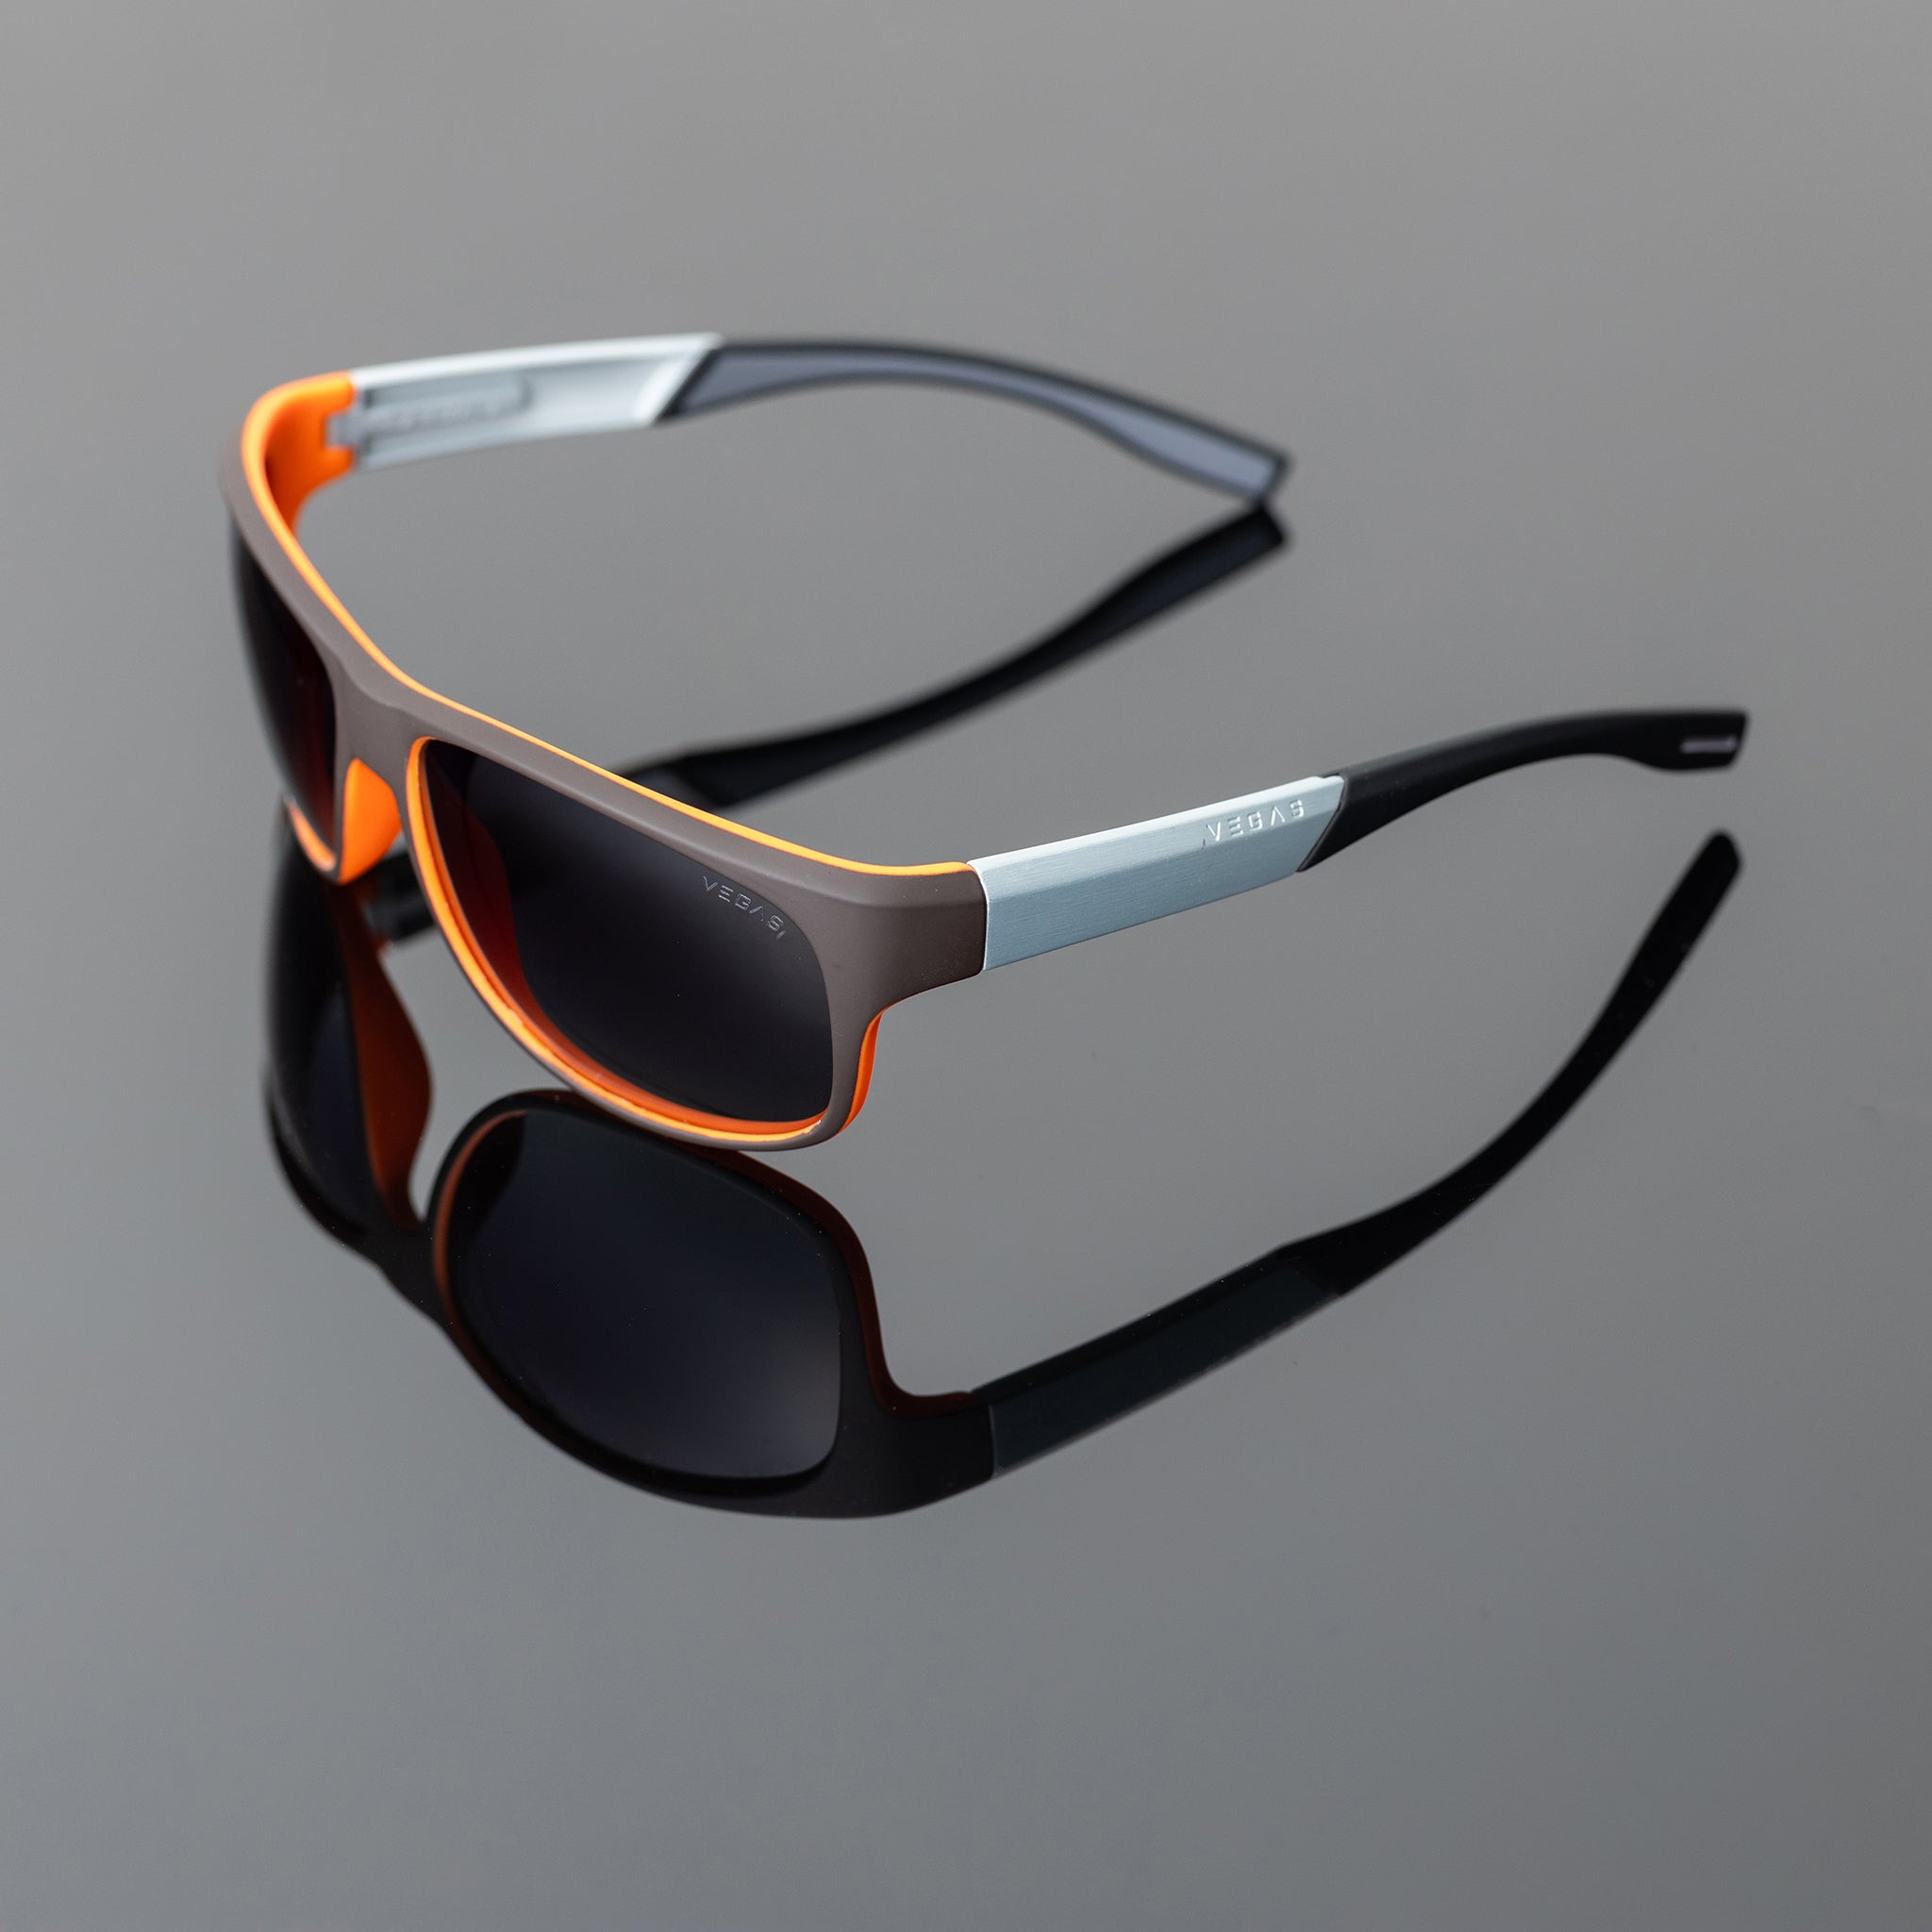 VEGAS V2064 - Sunglasses